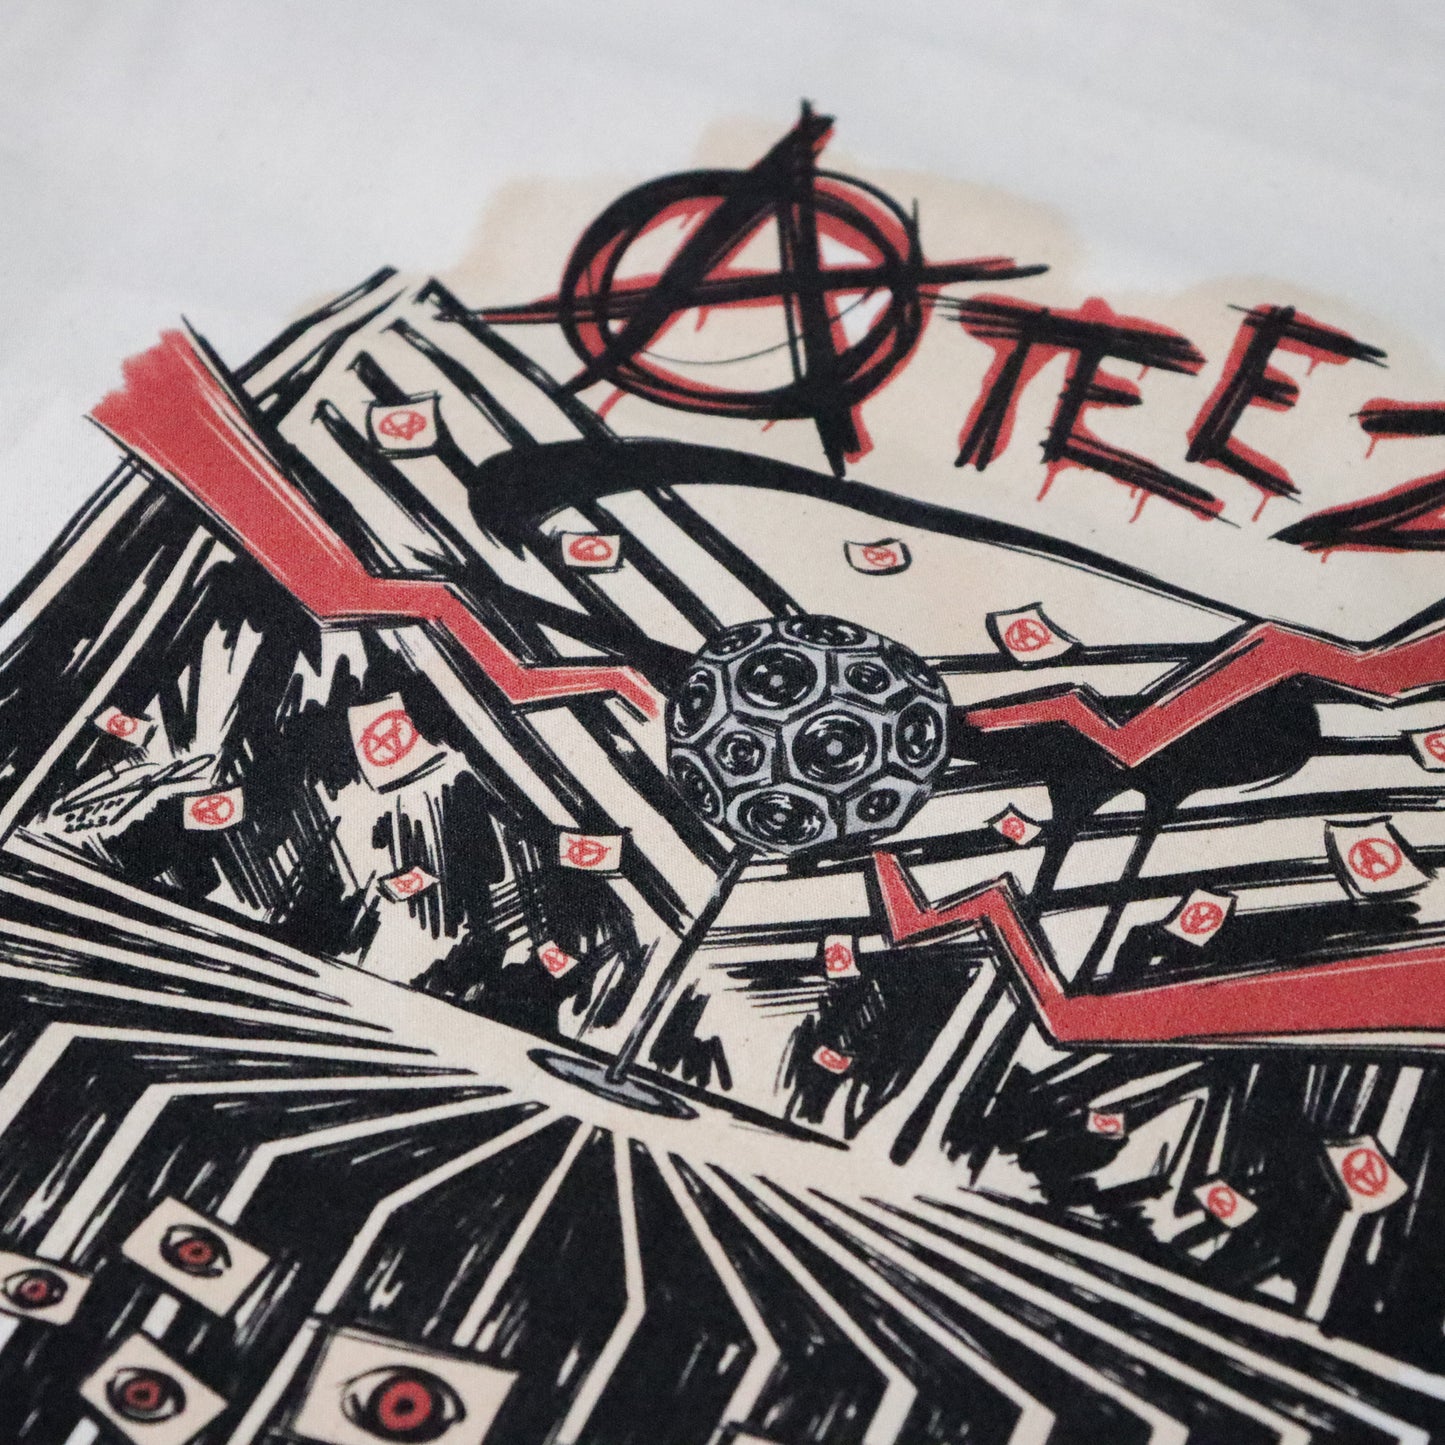 Printing detail of the ATEEZ Guerilla totebag